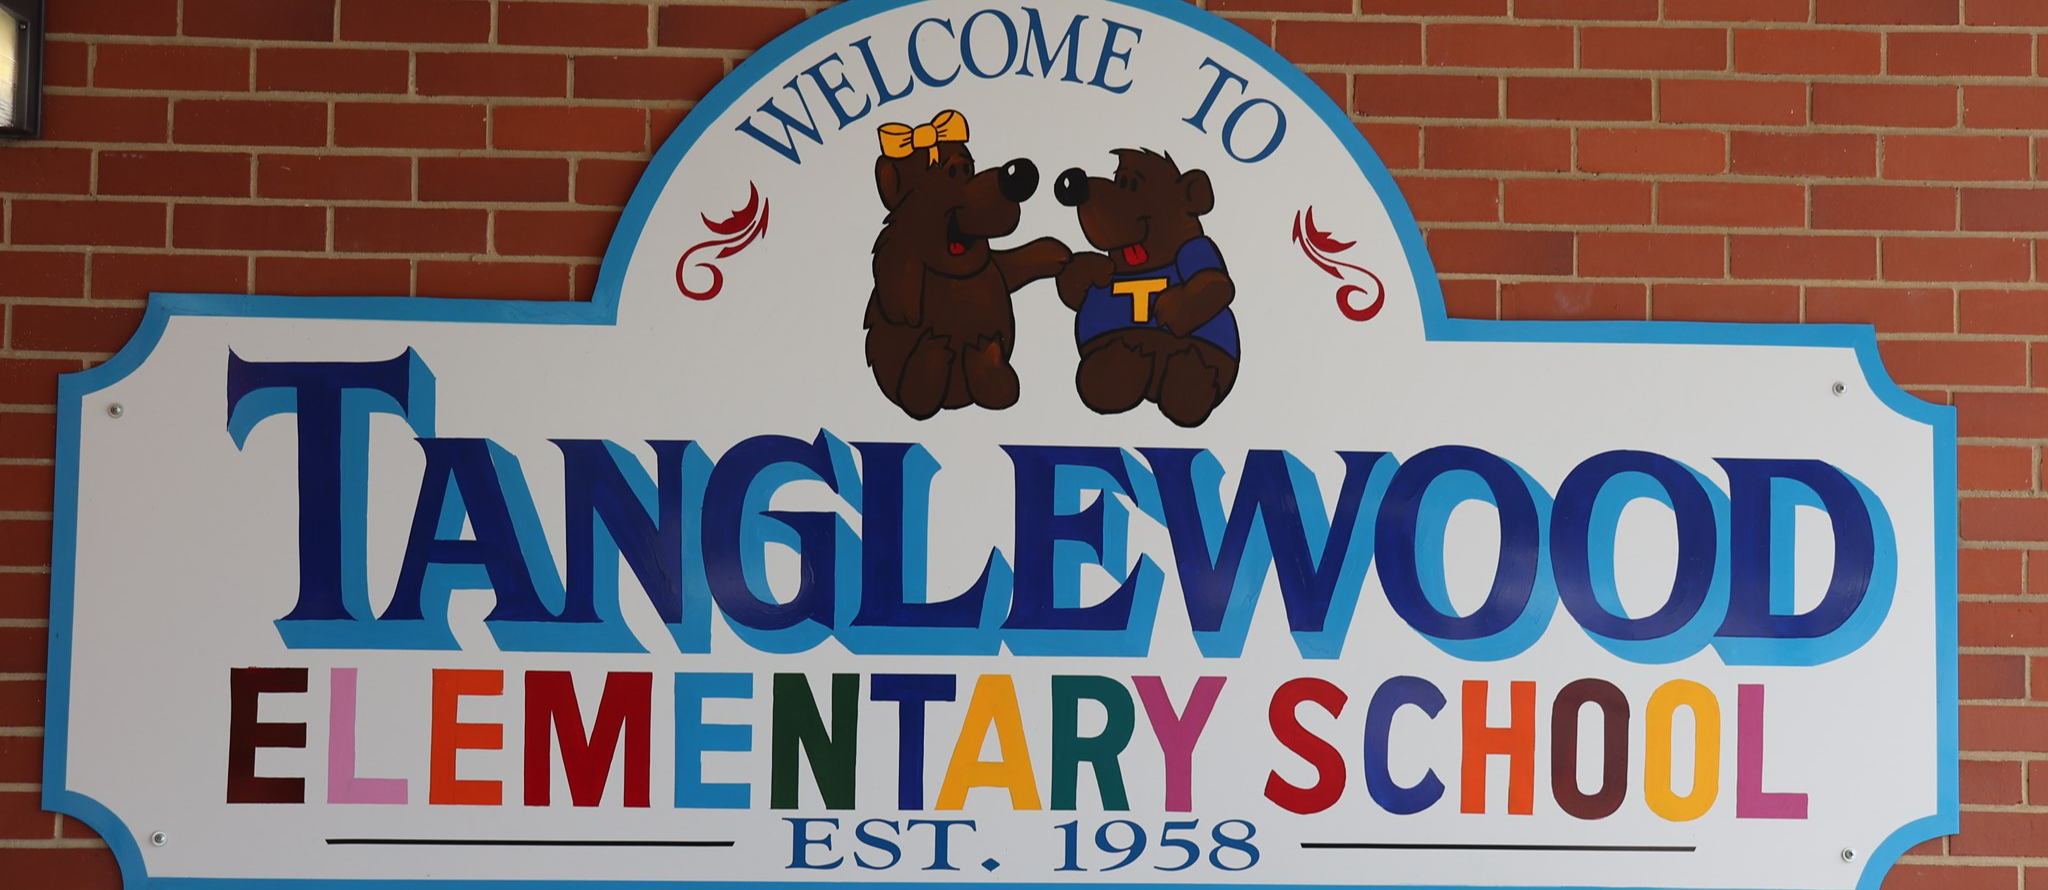 Tanglewood Elementary School